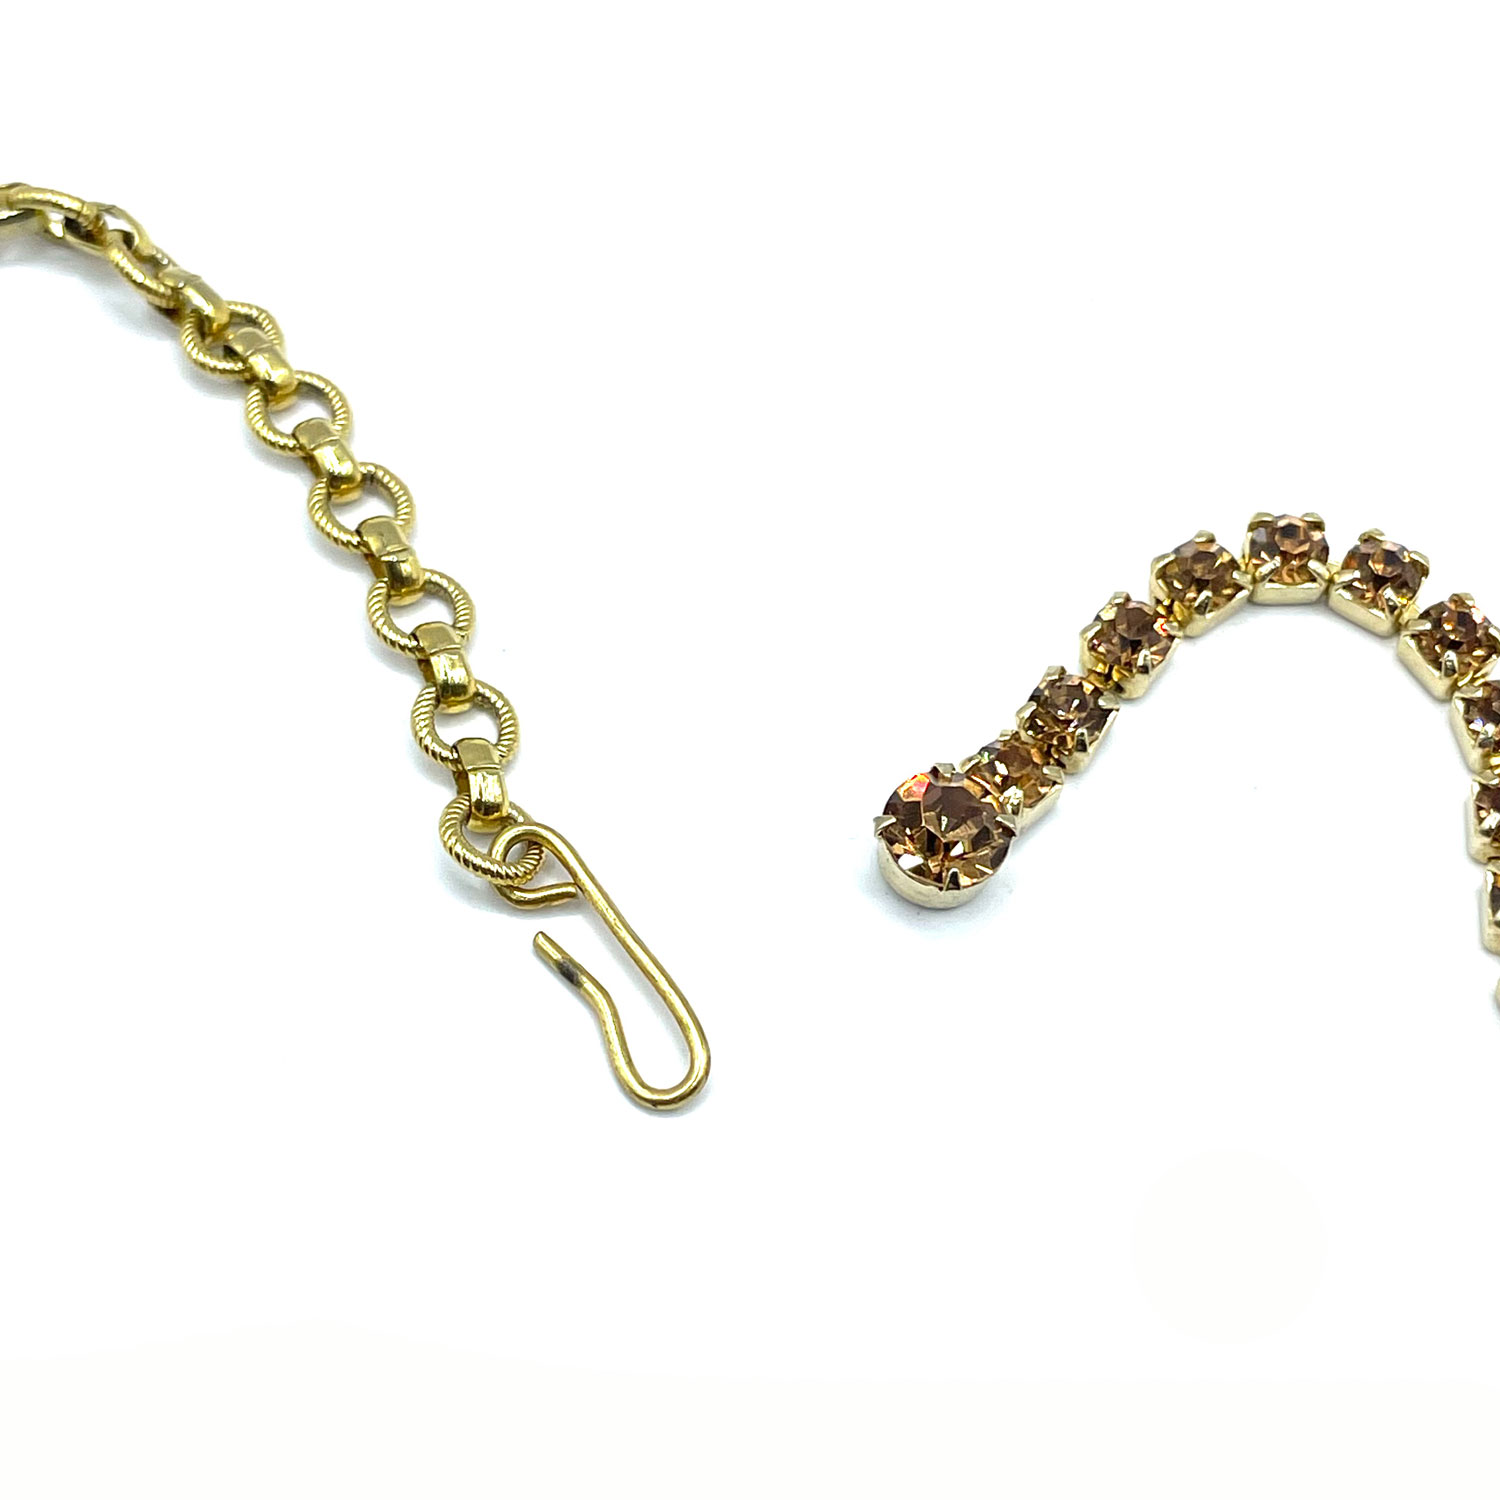 Juliana rhinestone necklace and earring set